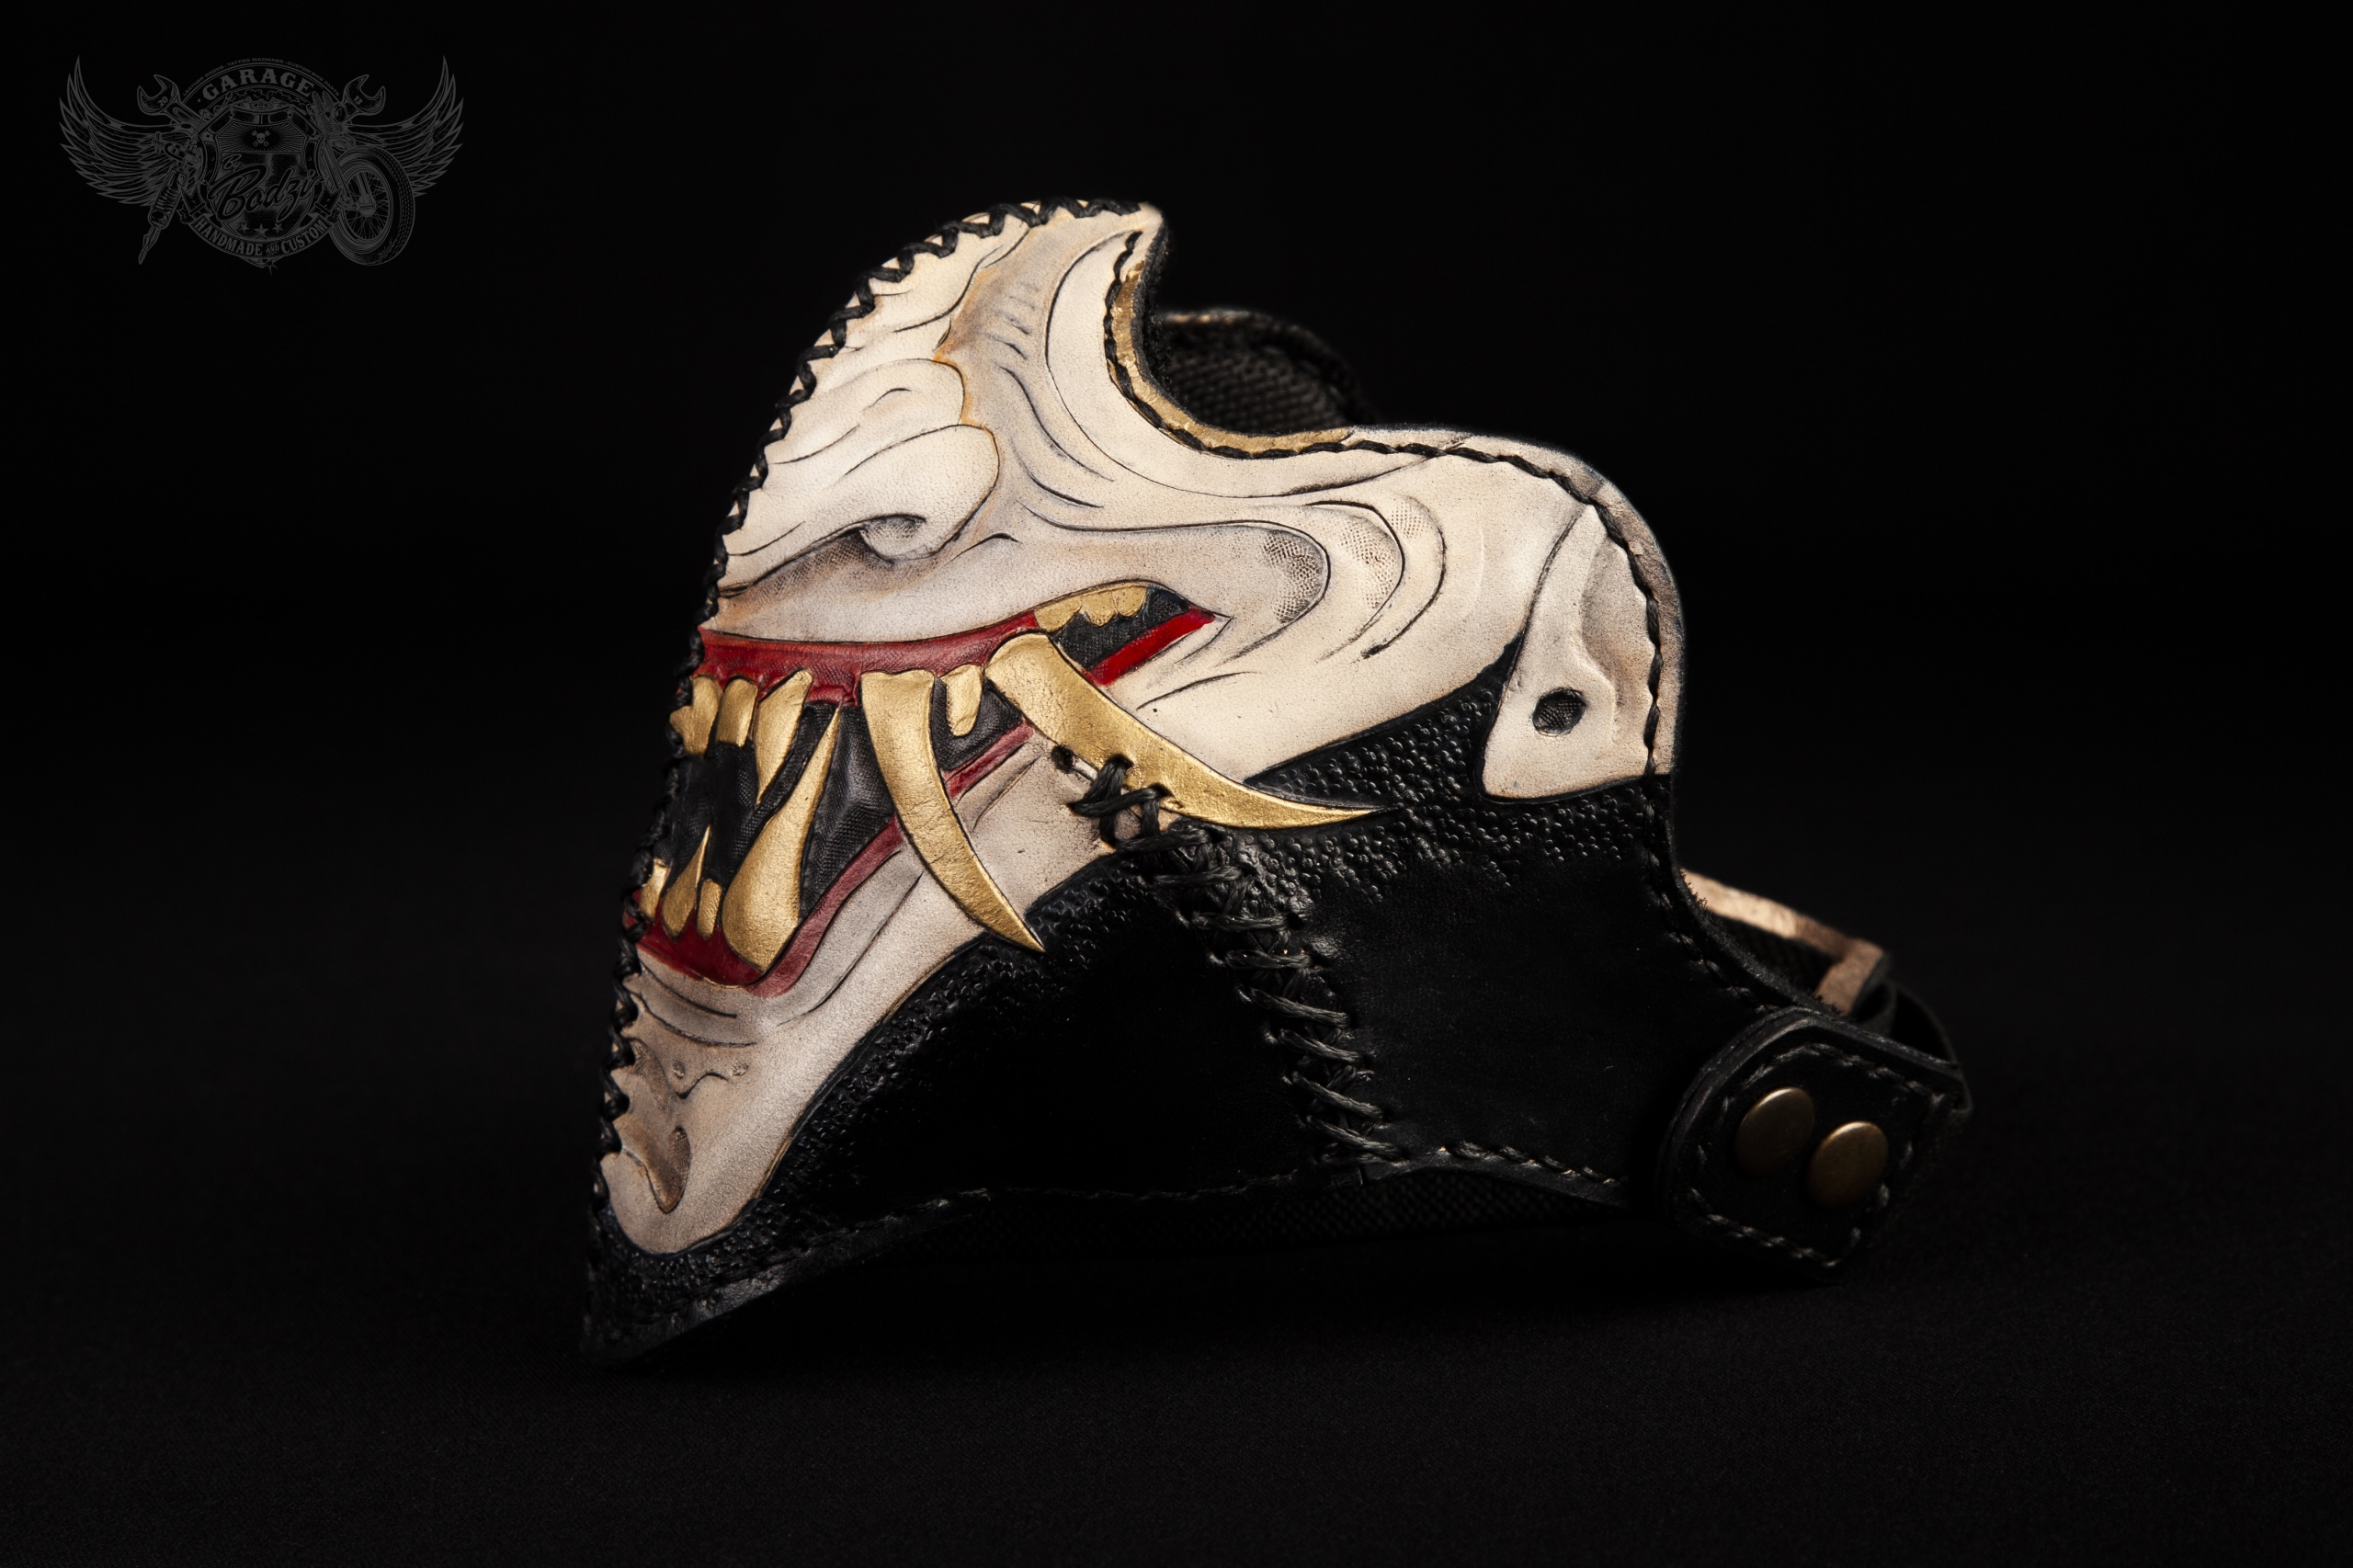 Nash Fishing mask Mask for Sale by braddda